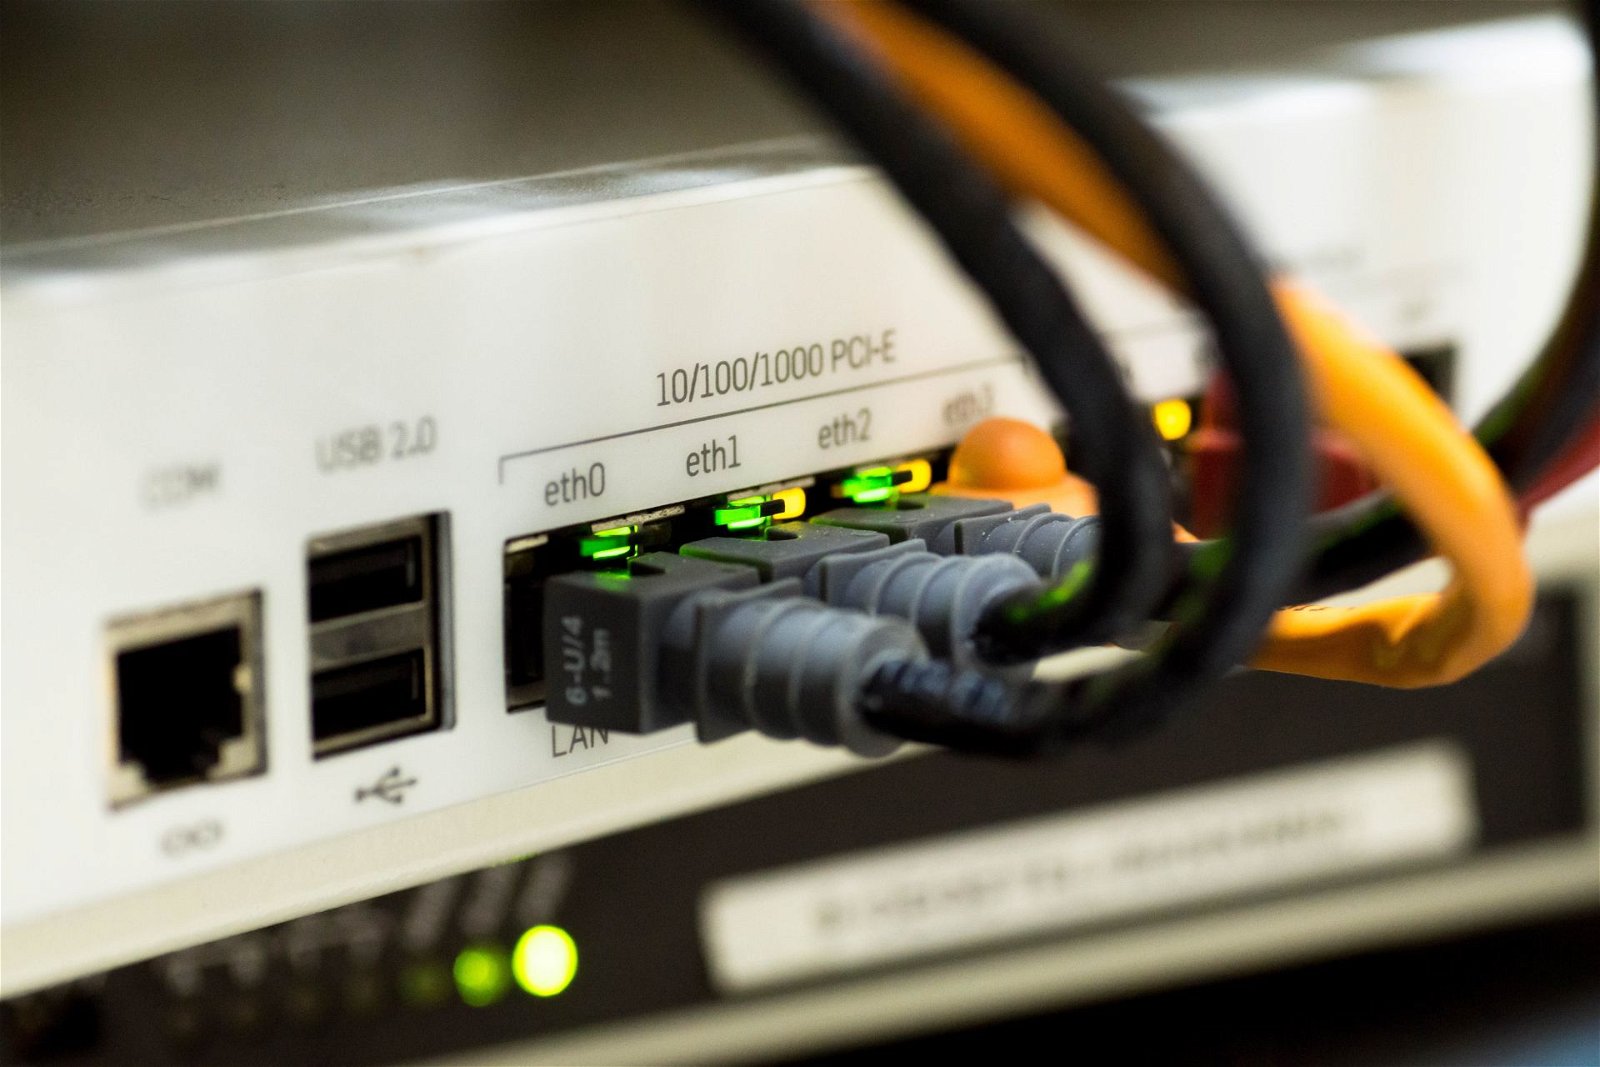 Conseil choix câble ADSL internet - Merci